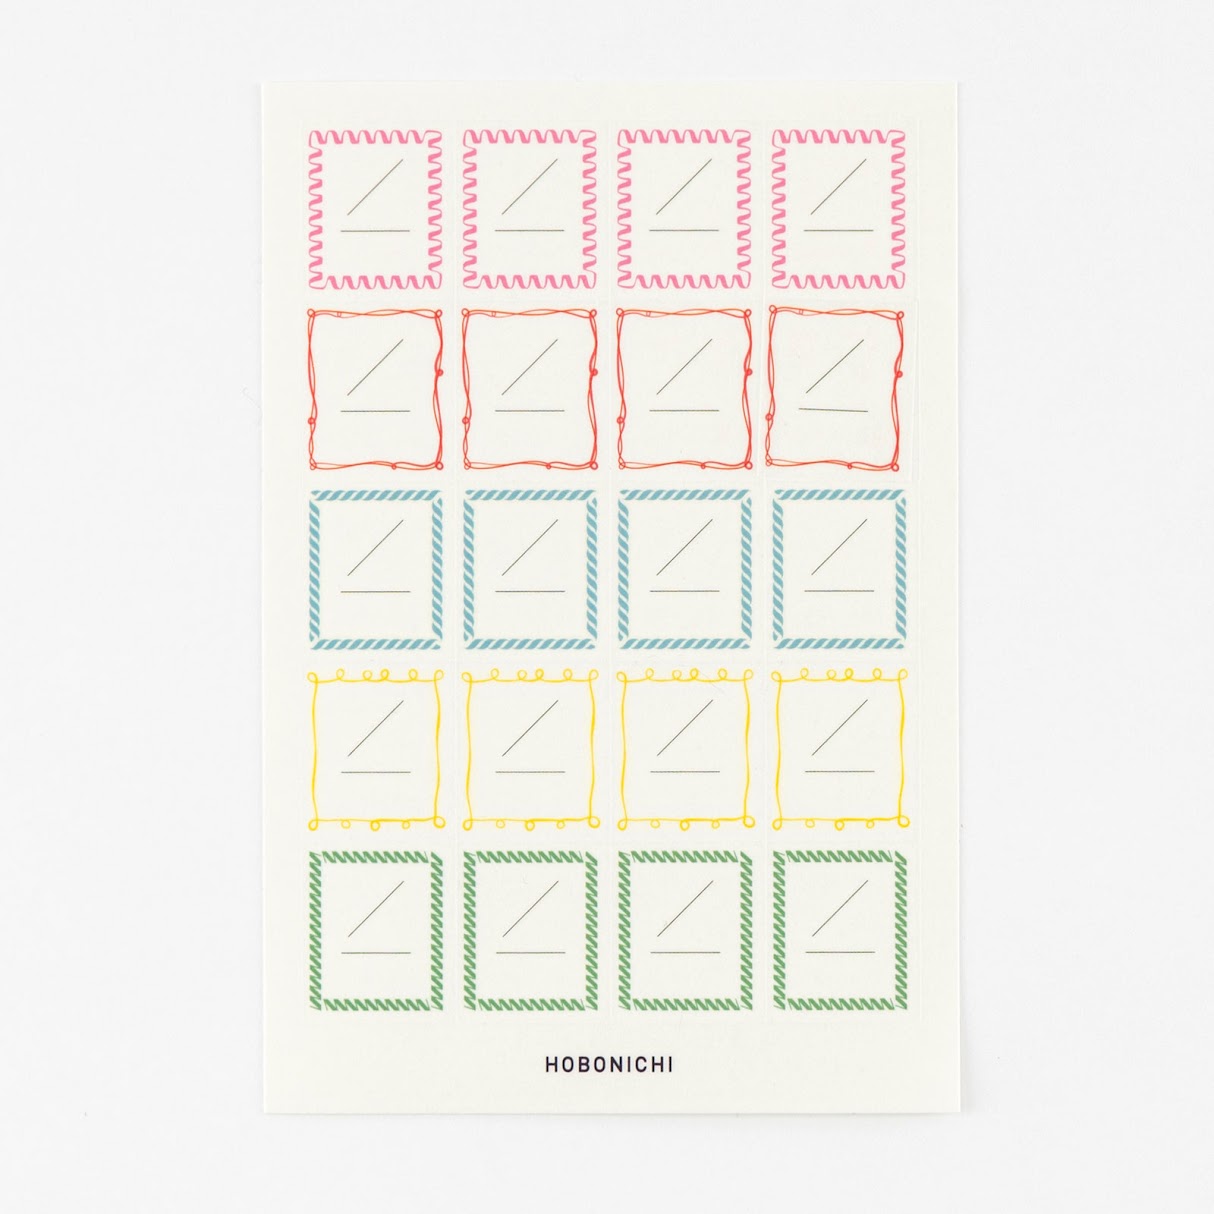 Hobonichi / Hobonichi Frame Stickers - Accessories Lineup